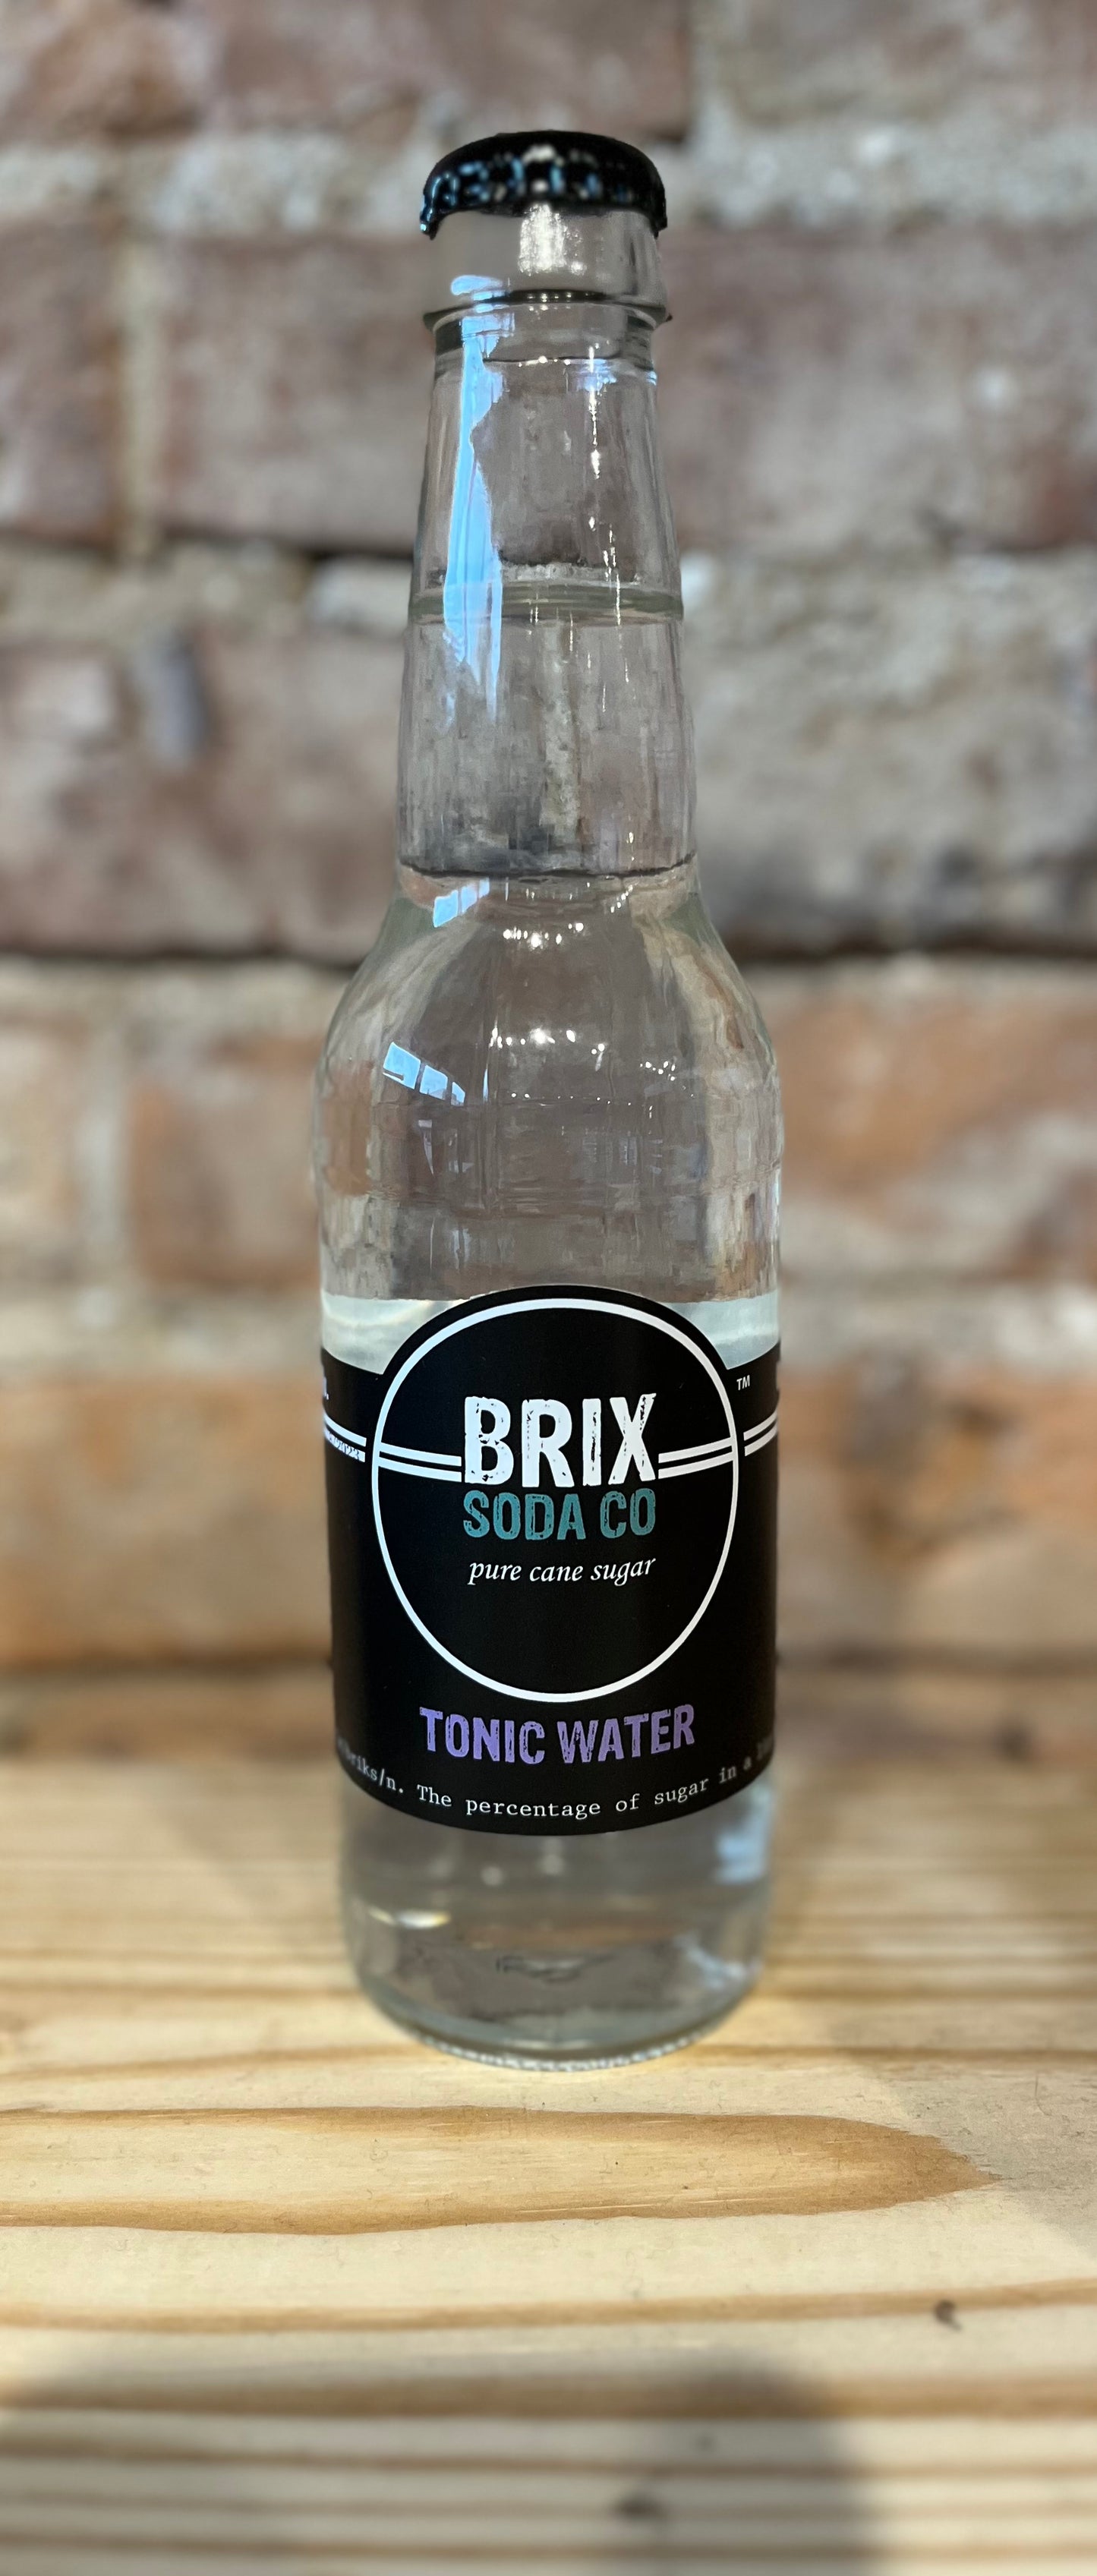 BRIX Tonic Water